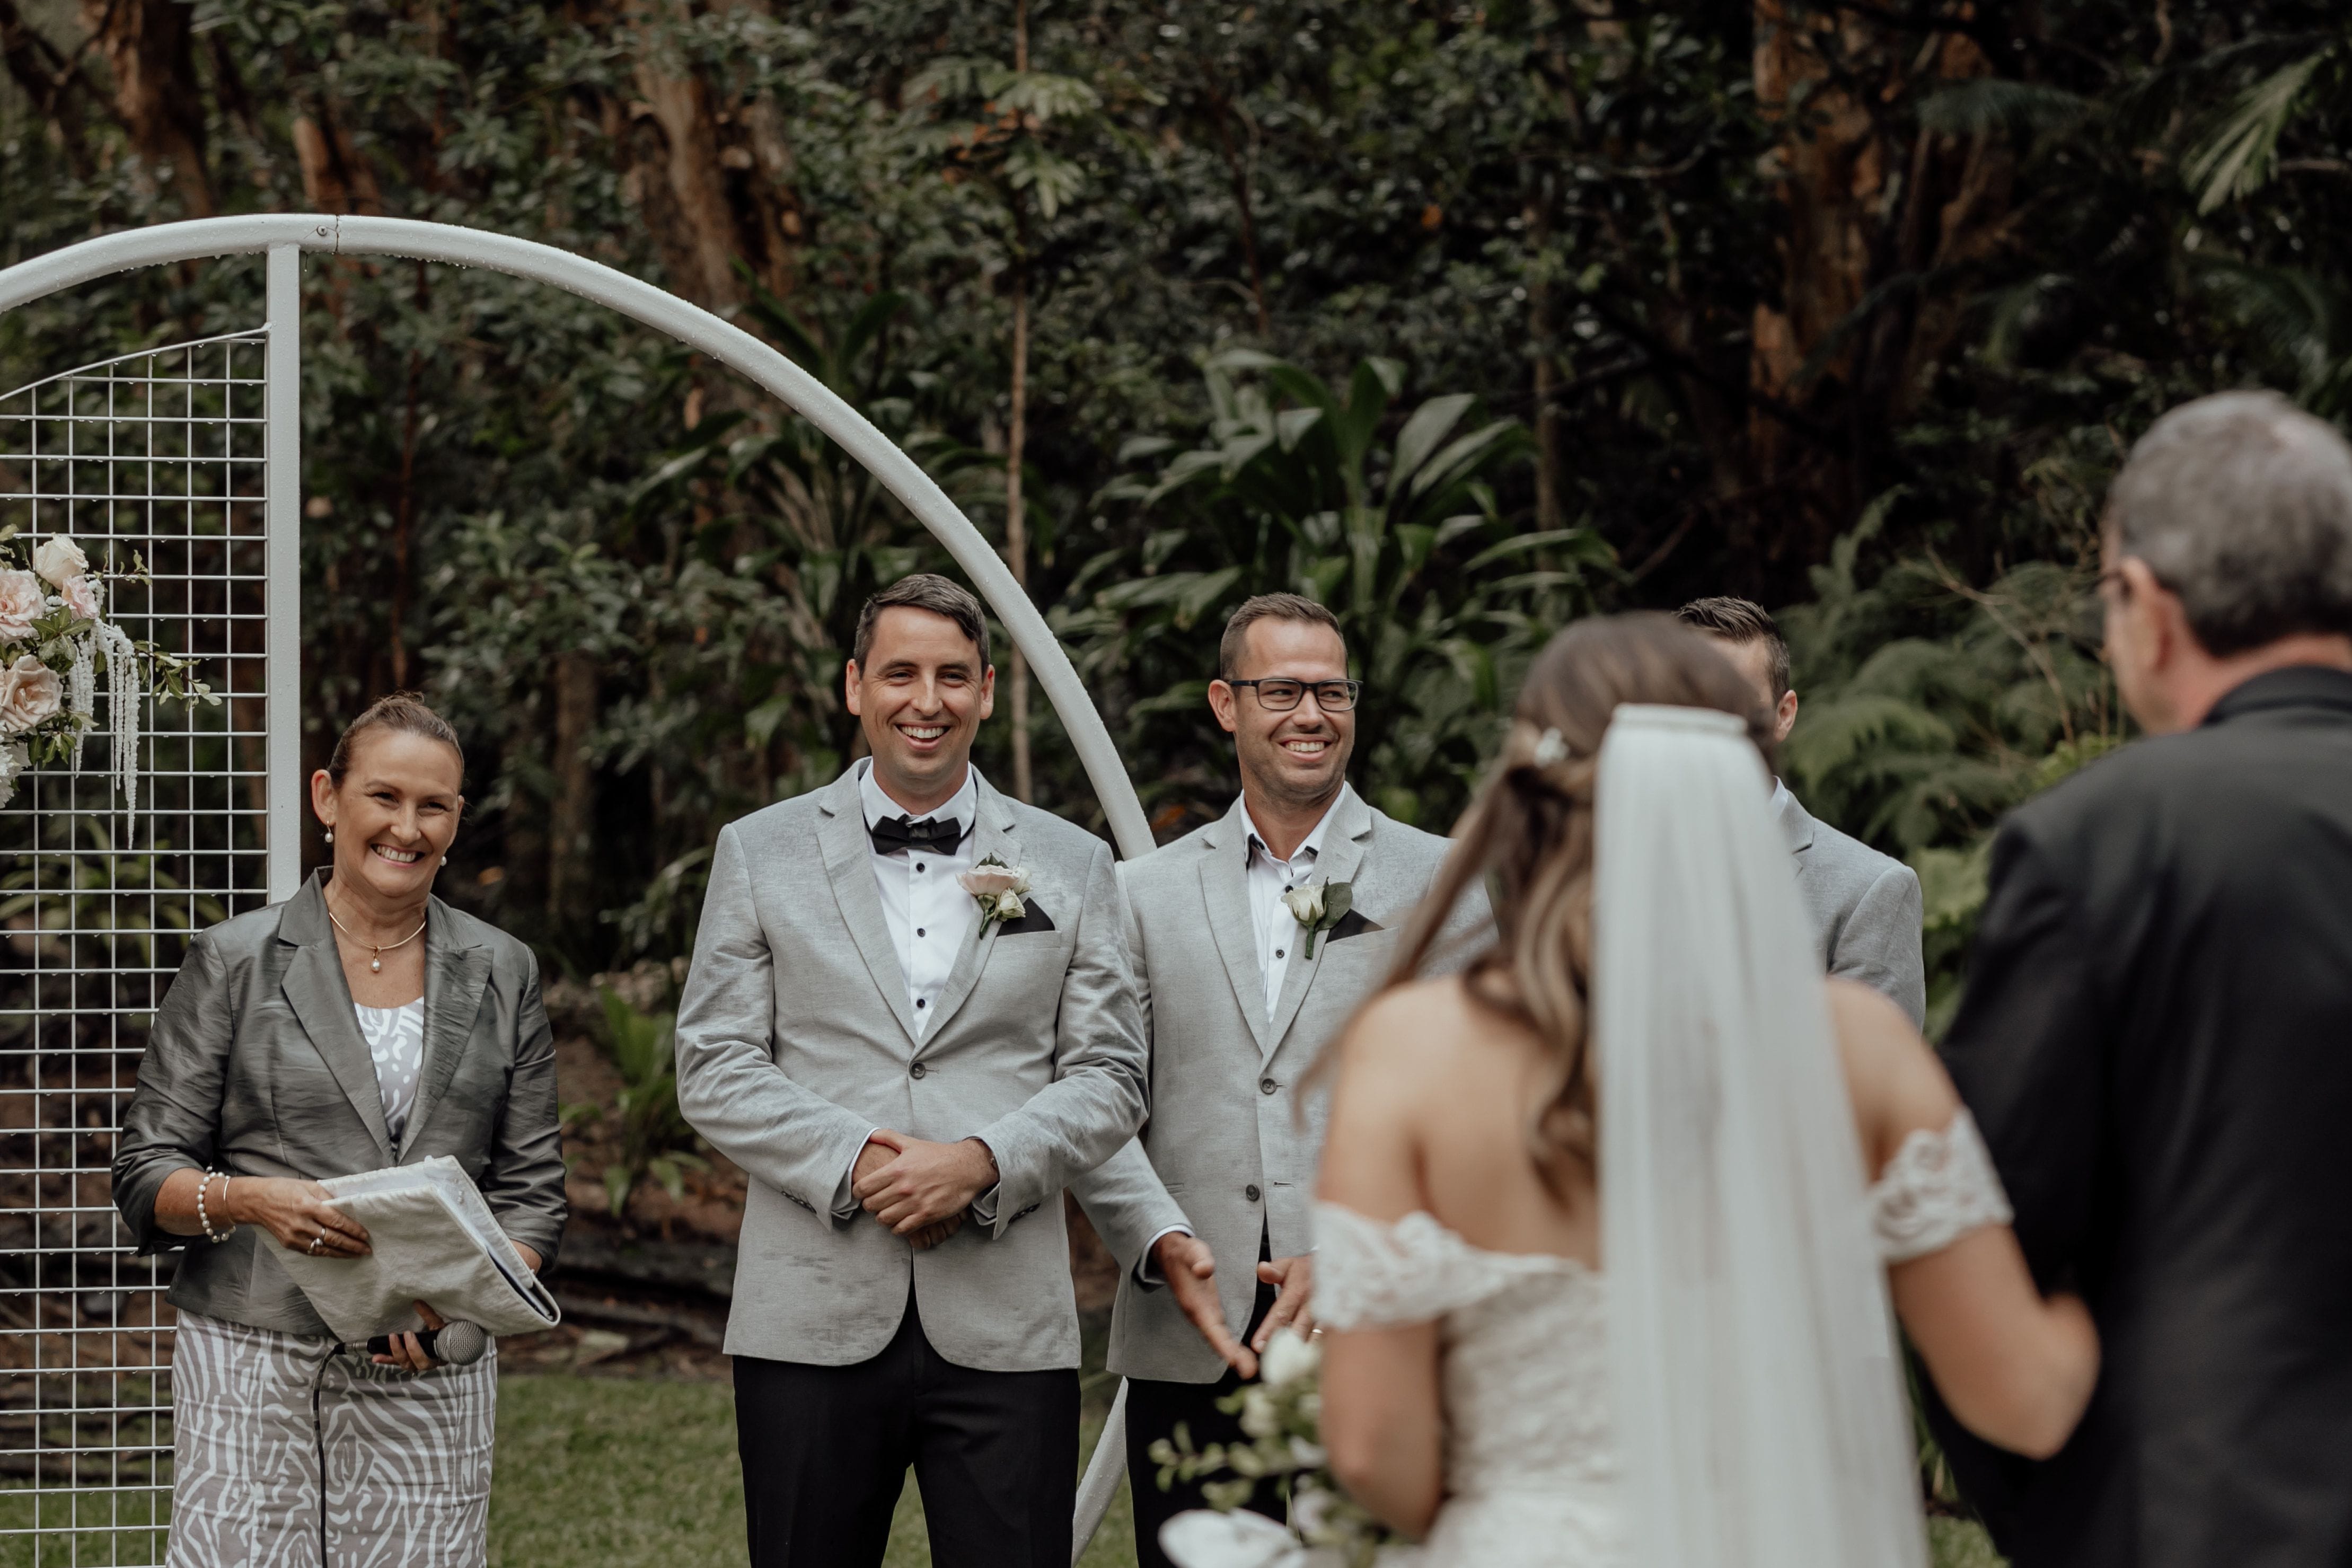 Gold Coast Marriage celebrant Liz Pforr